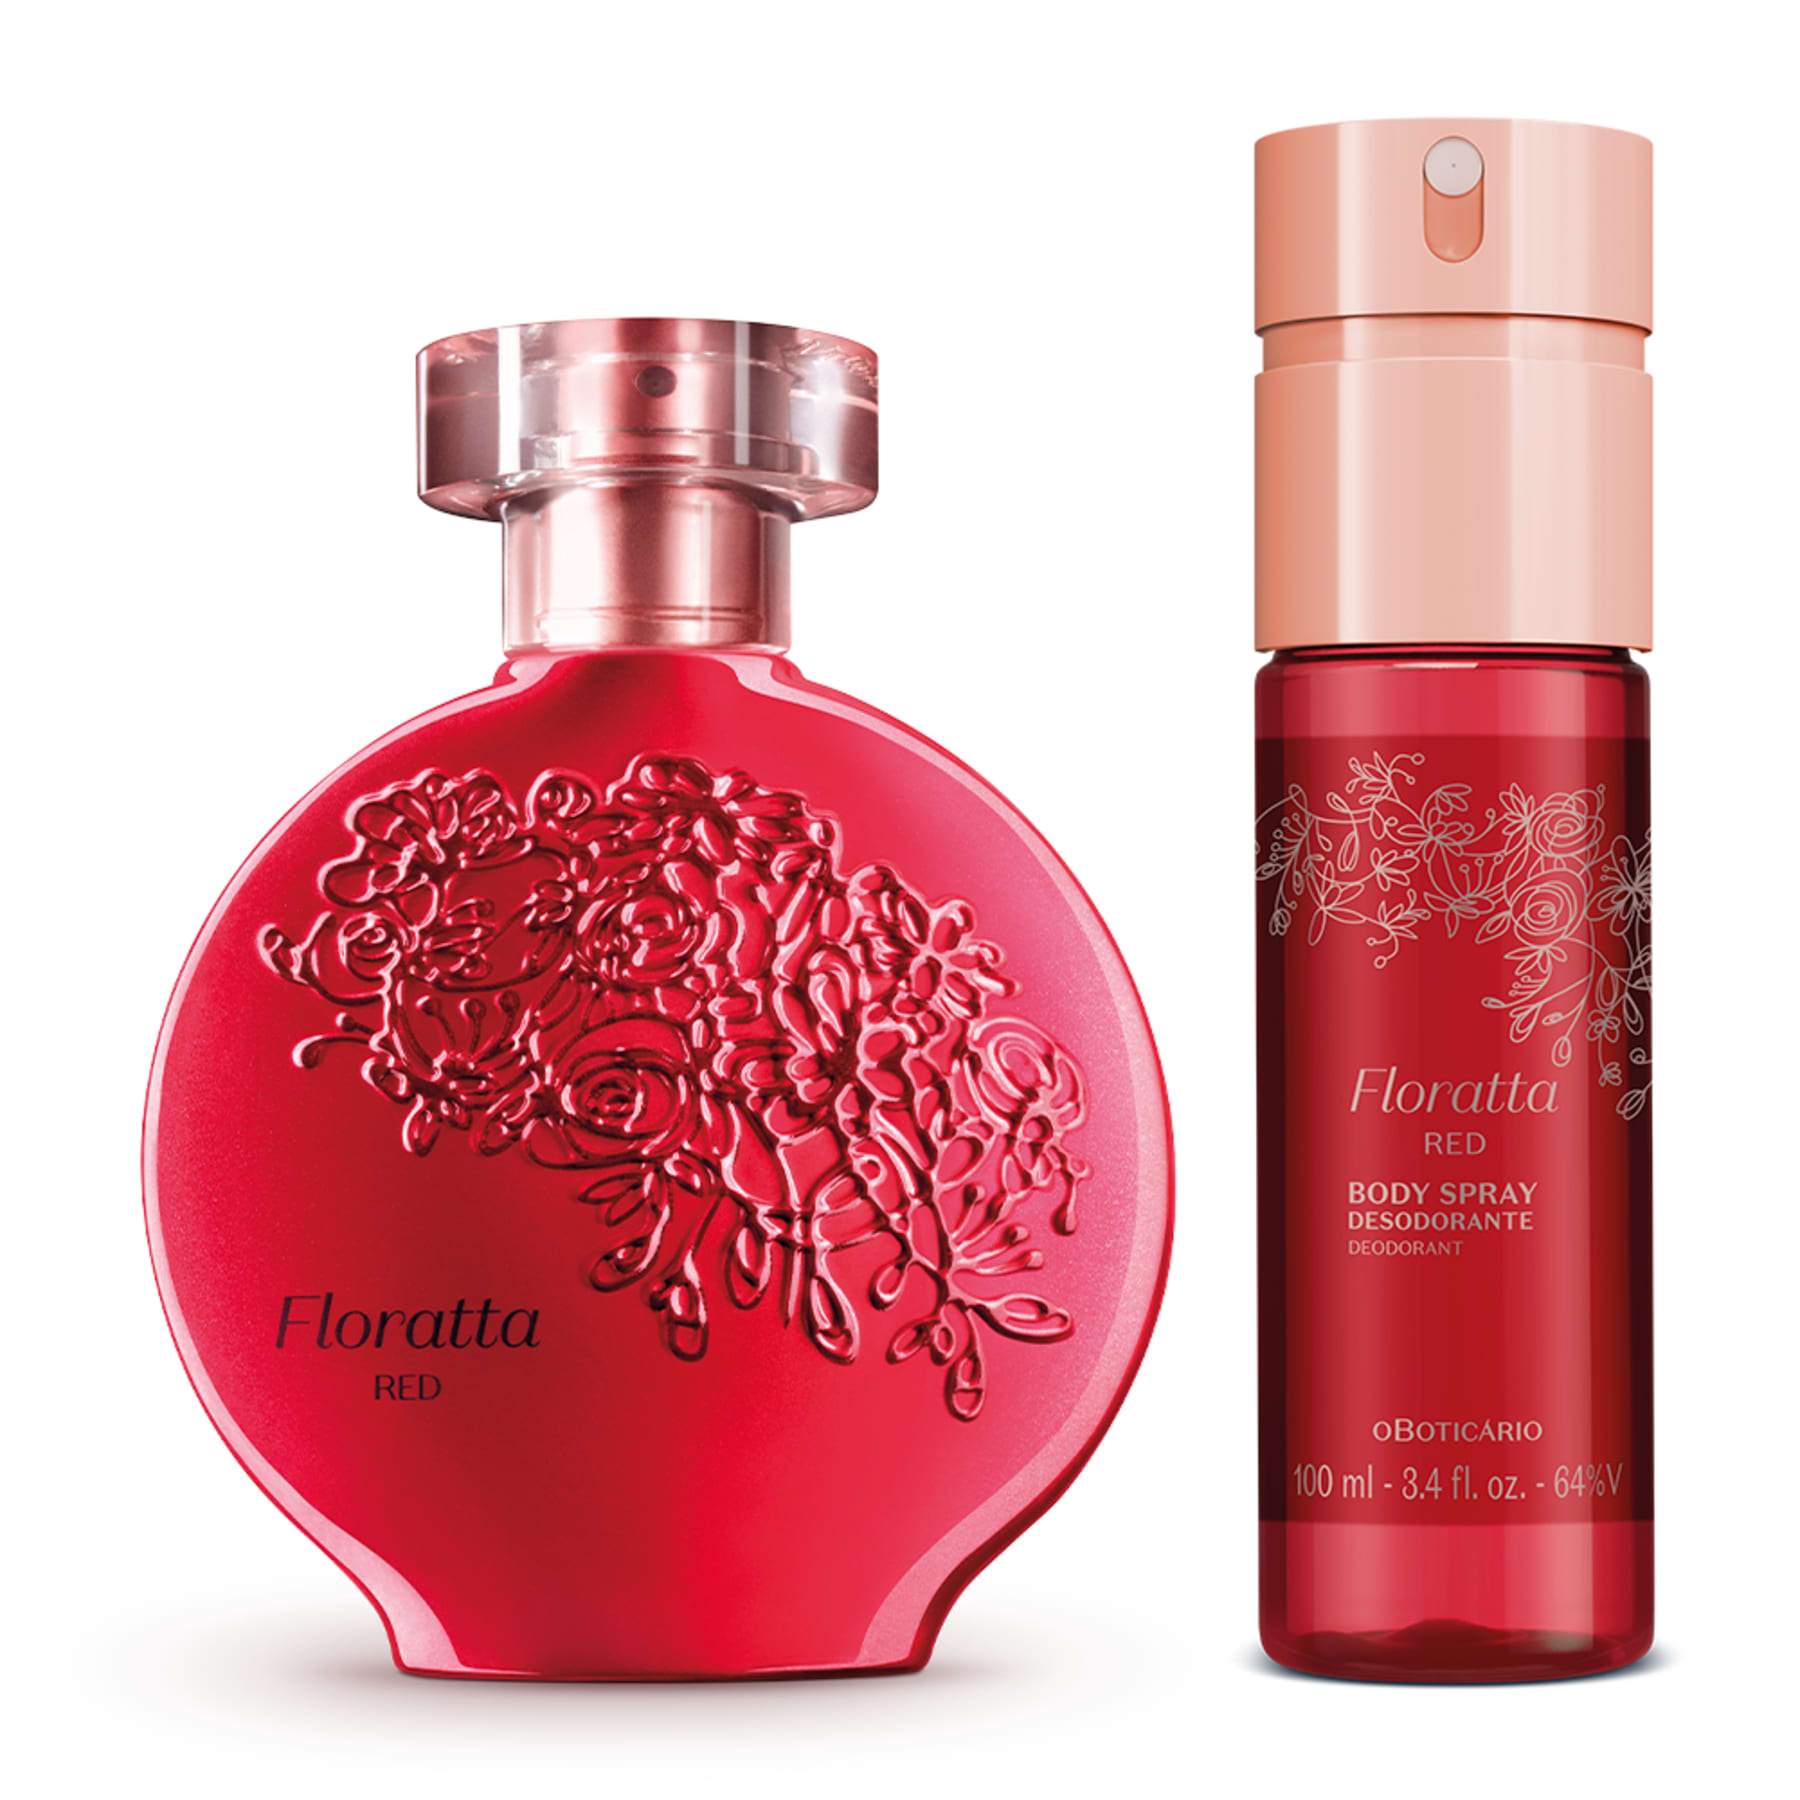 Kit Floratta Red: Deodorant Cologne 75ml + Body Spray 100ml - o Boticario